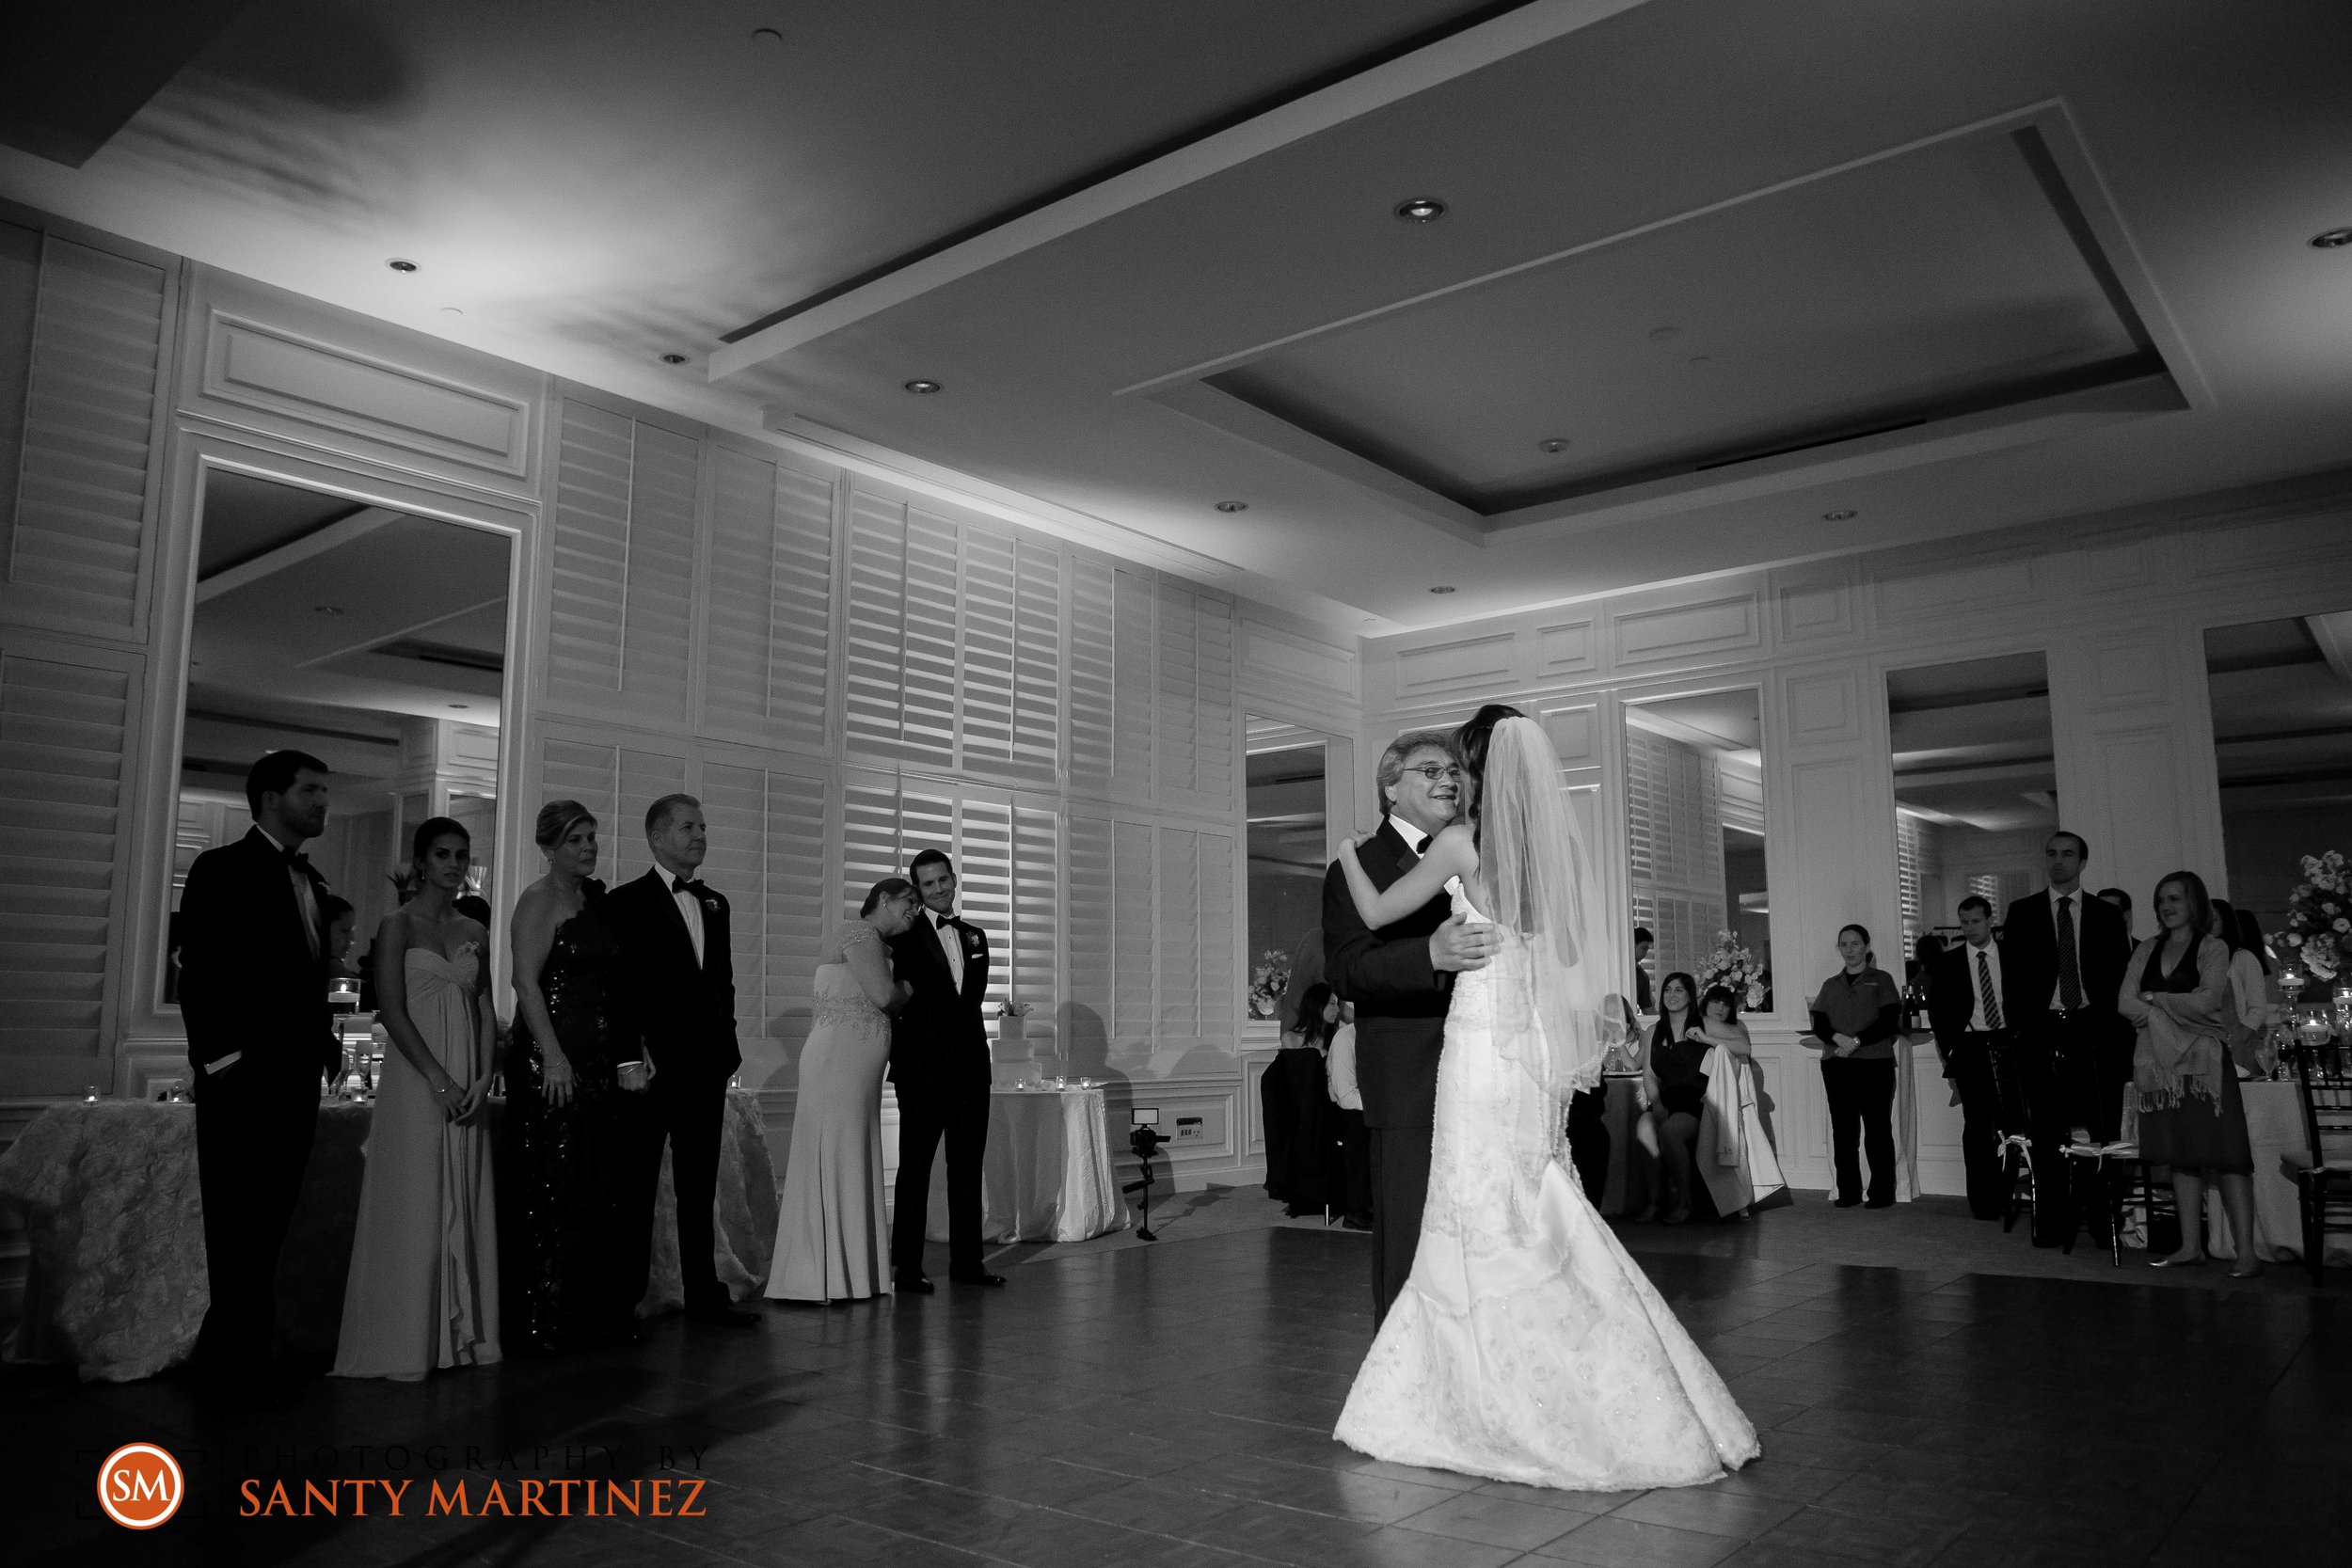 Miami Wedding Photographer - Santy Martinez -35.jpg